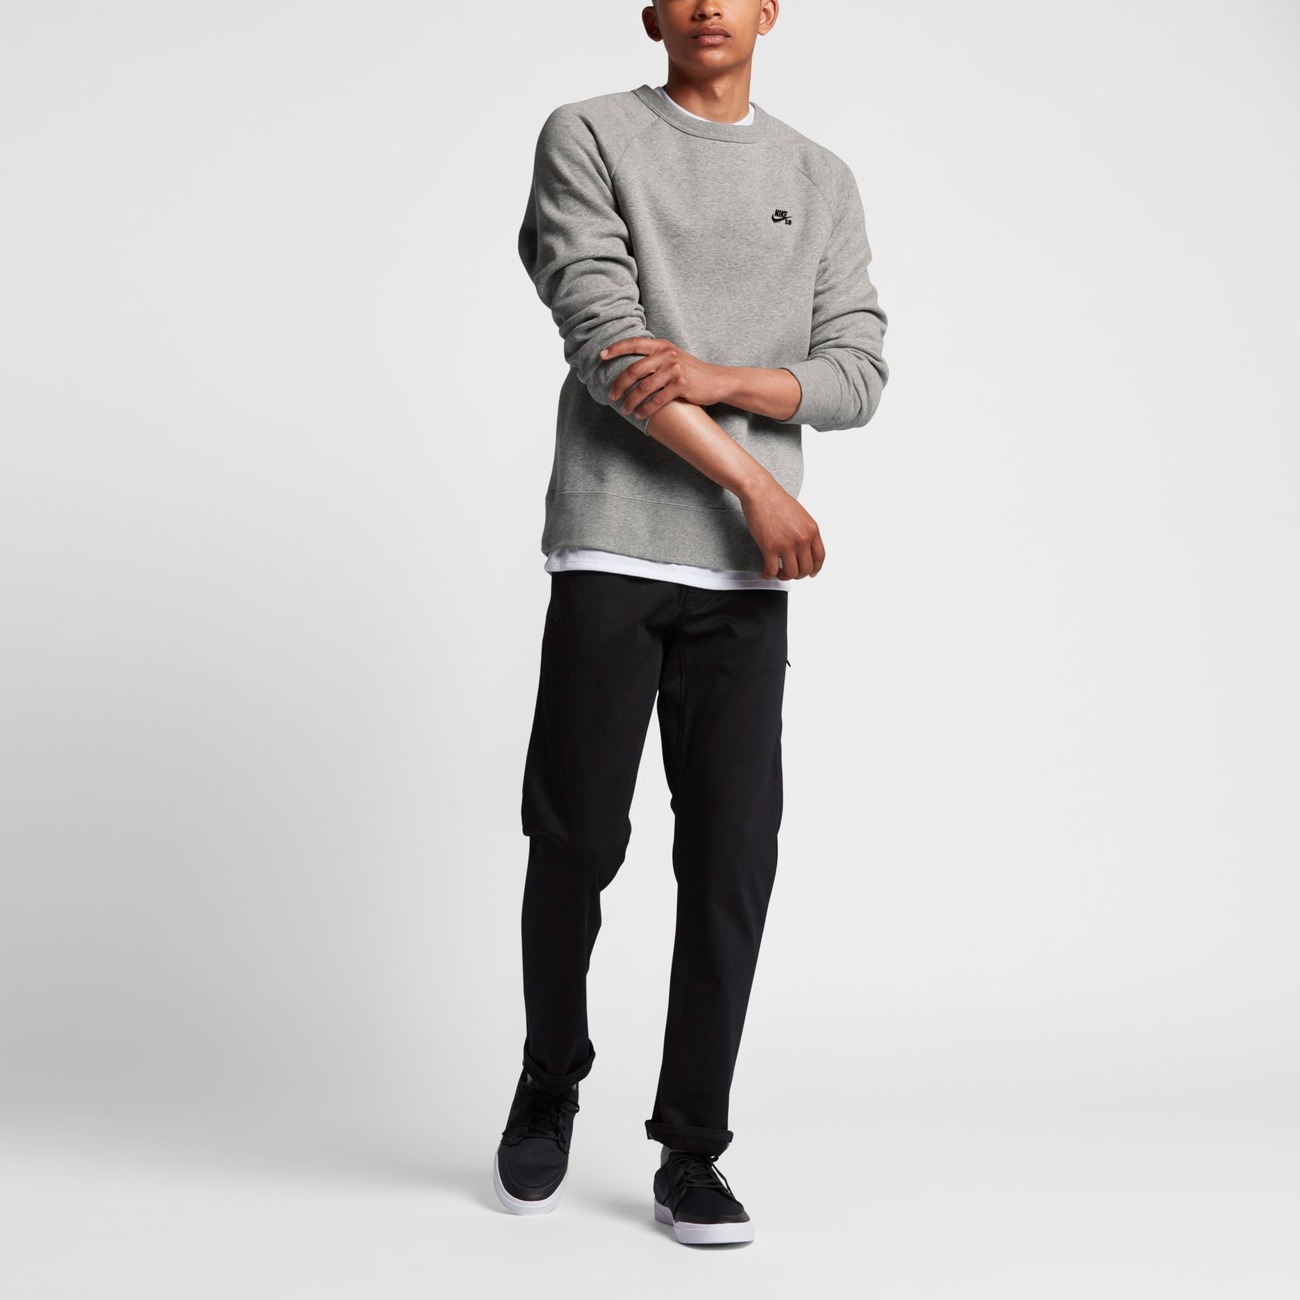 Promote Rub Luncheon Oferta de Blusão Nike SB Icon Fleece Masculino - Nike - Just Do It